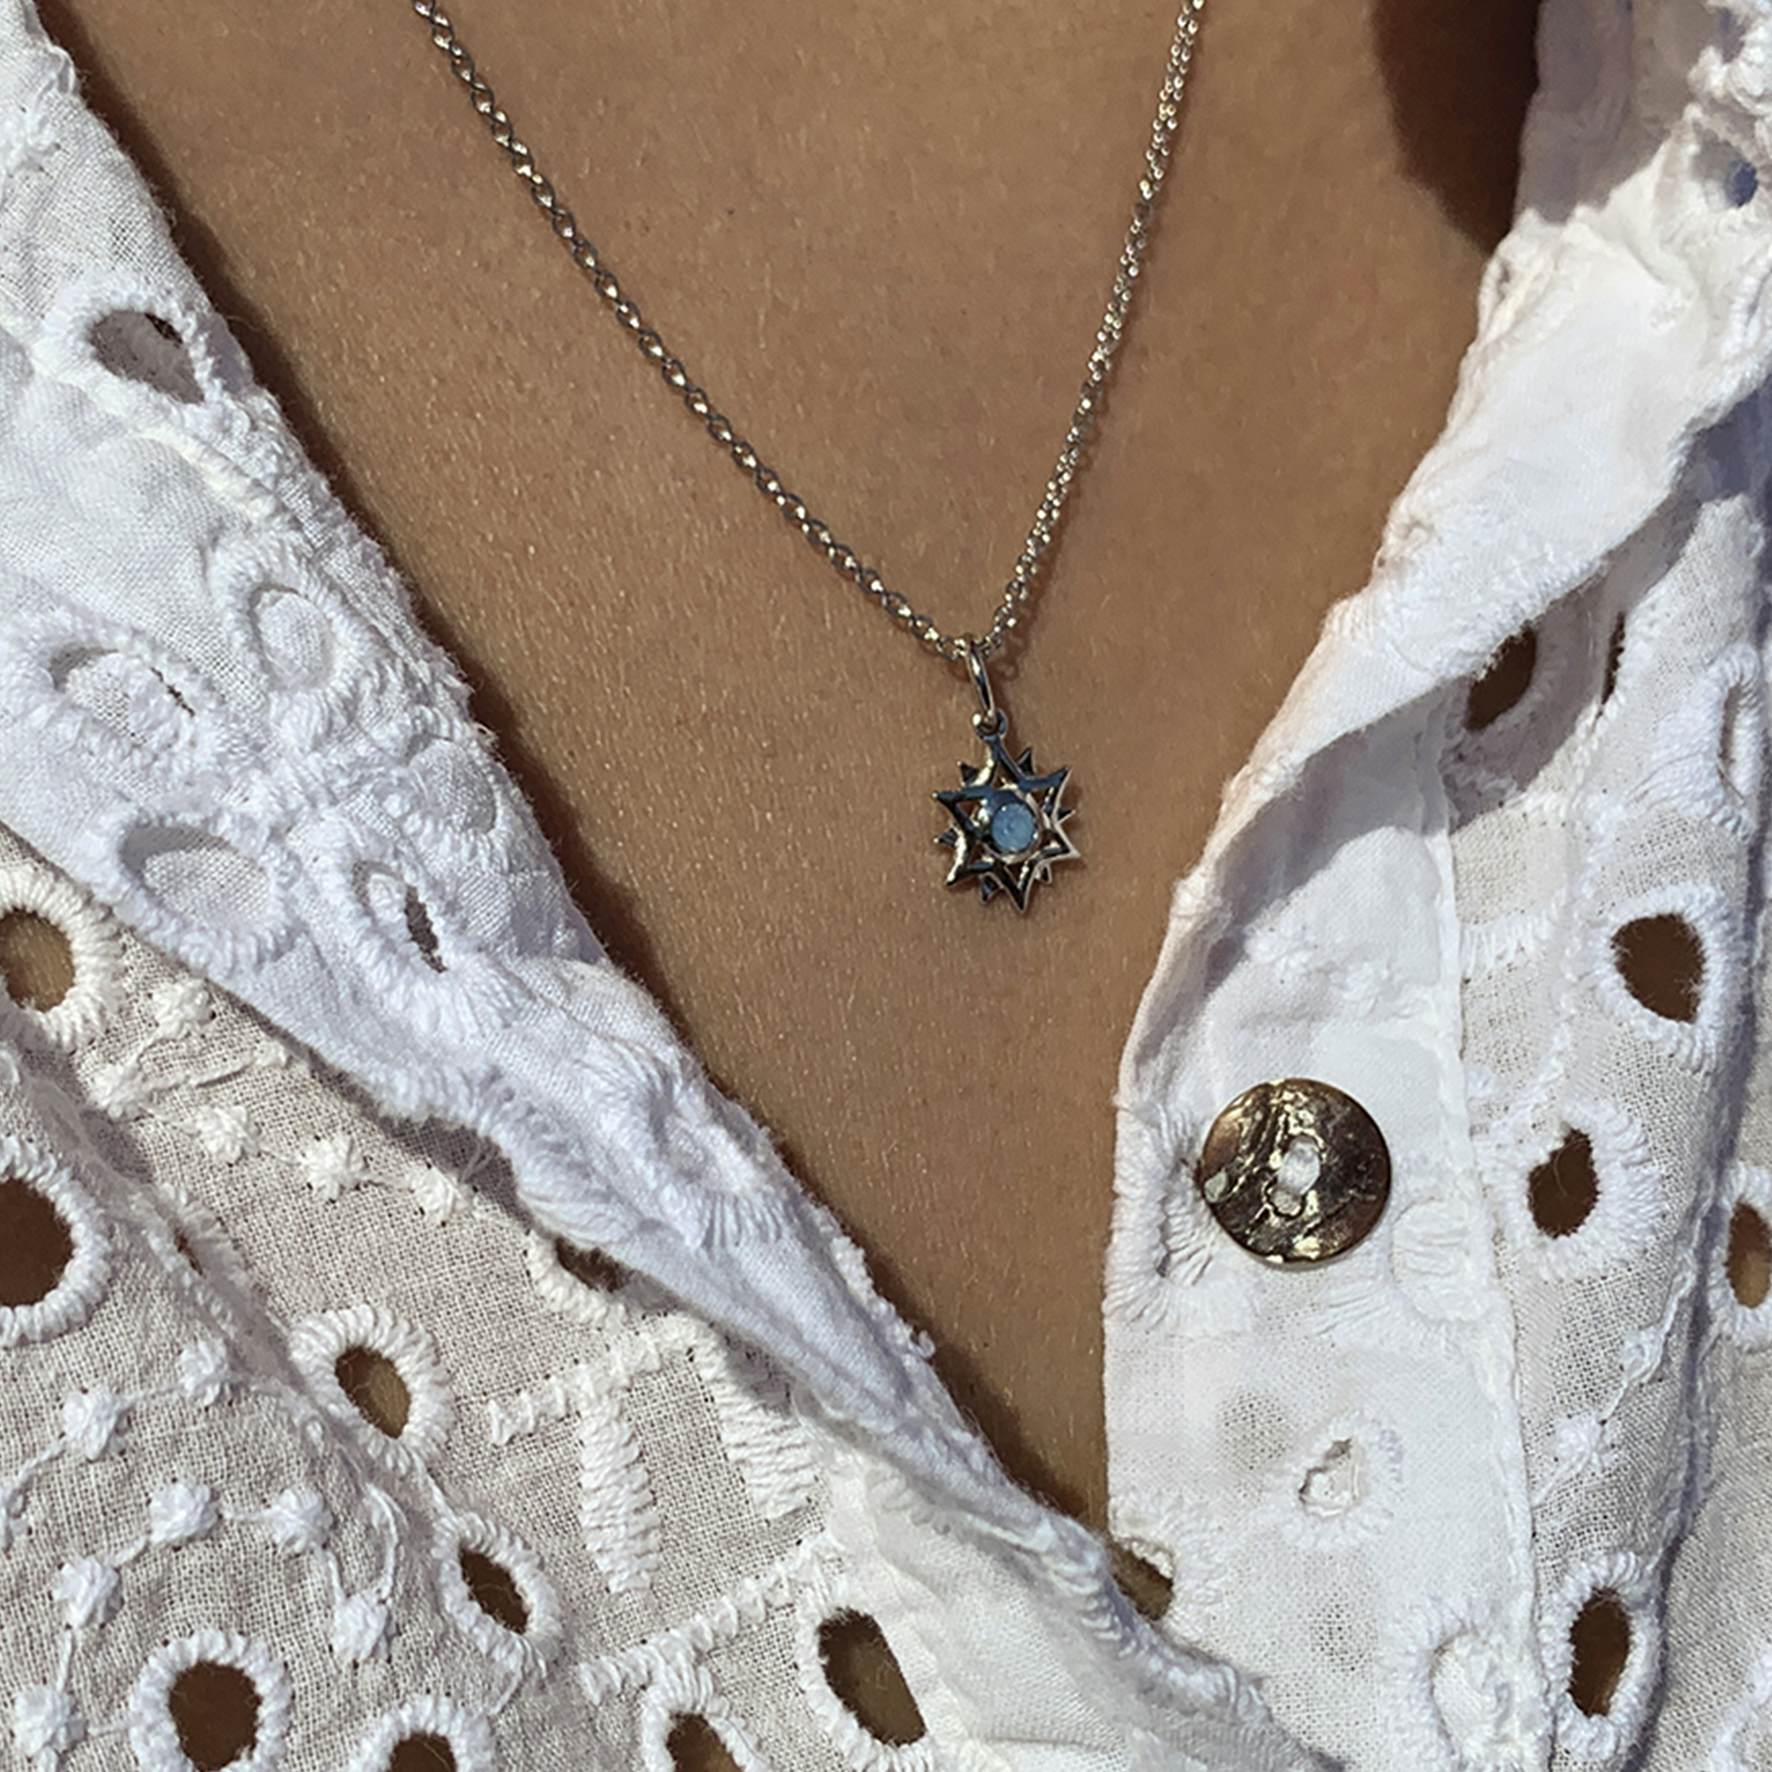 Olivia by Sistie Pendant Necklace von Sistie in Vergoldet-Silber Sterling 925